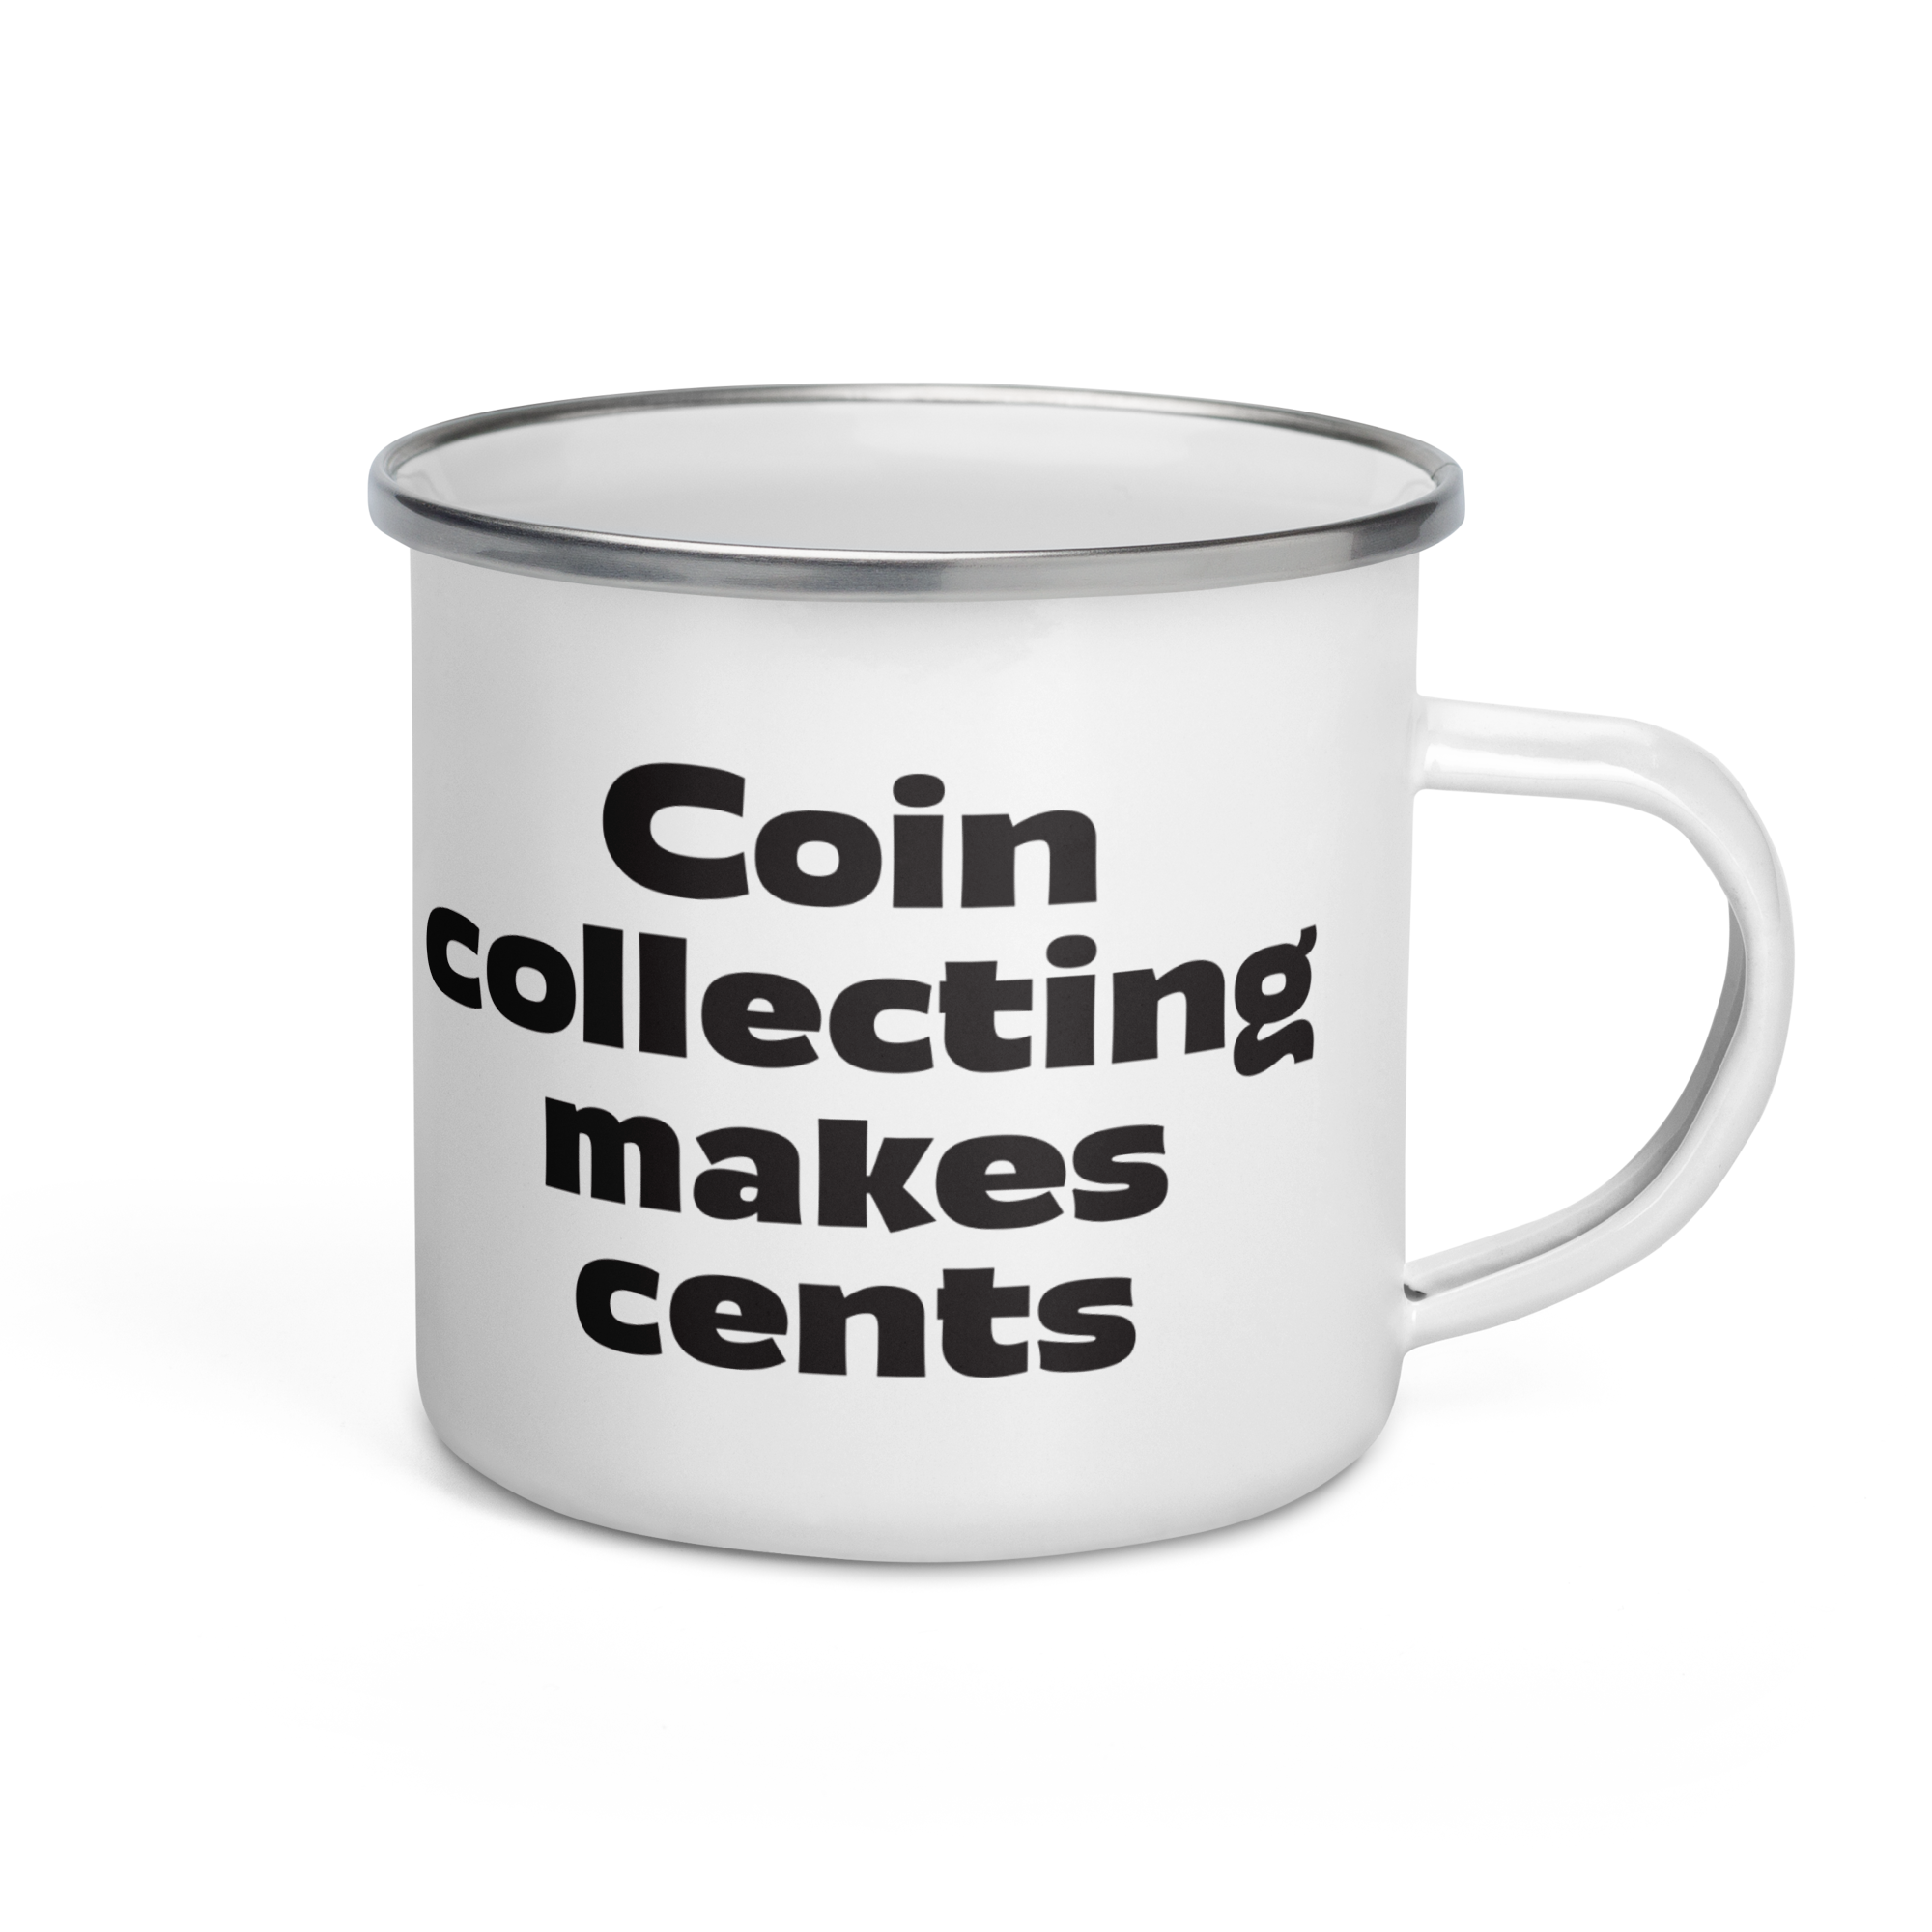 "Coin Collecting Makes Cents" Enamel Mug